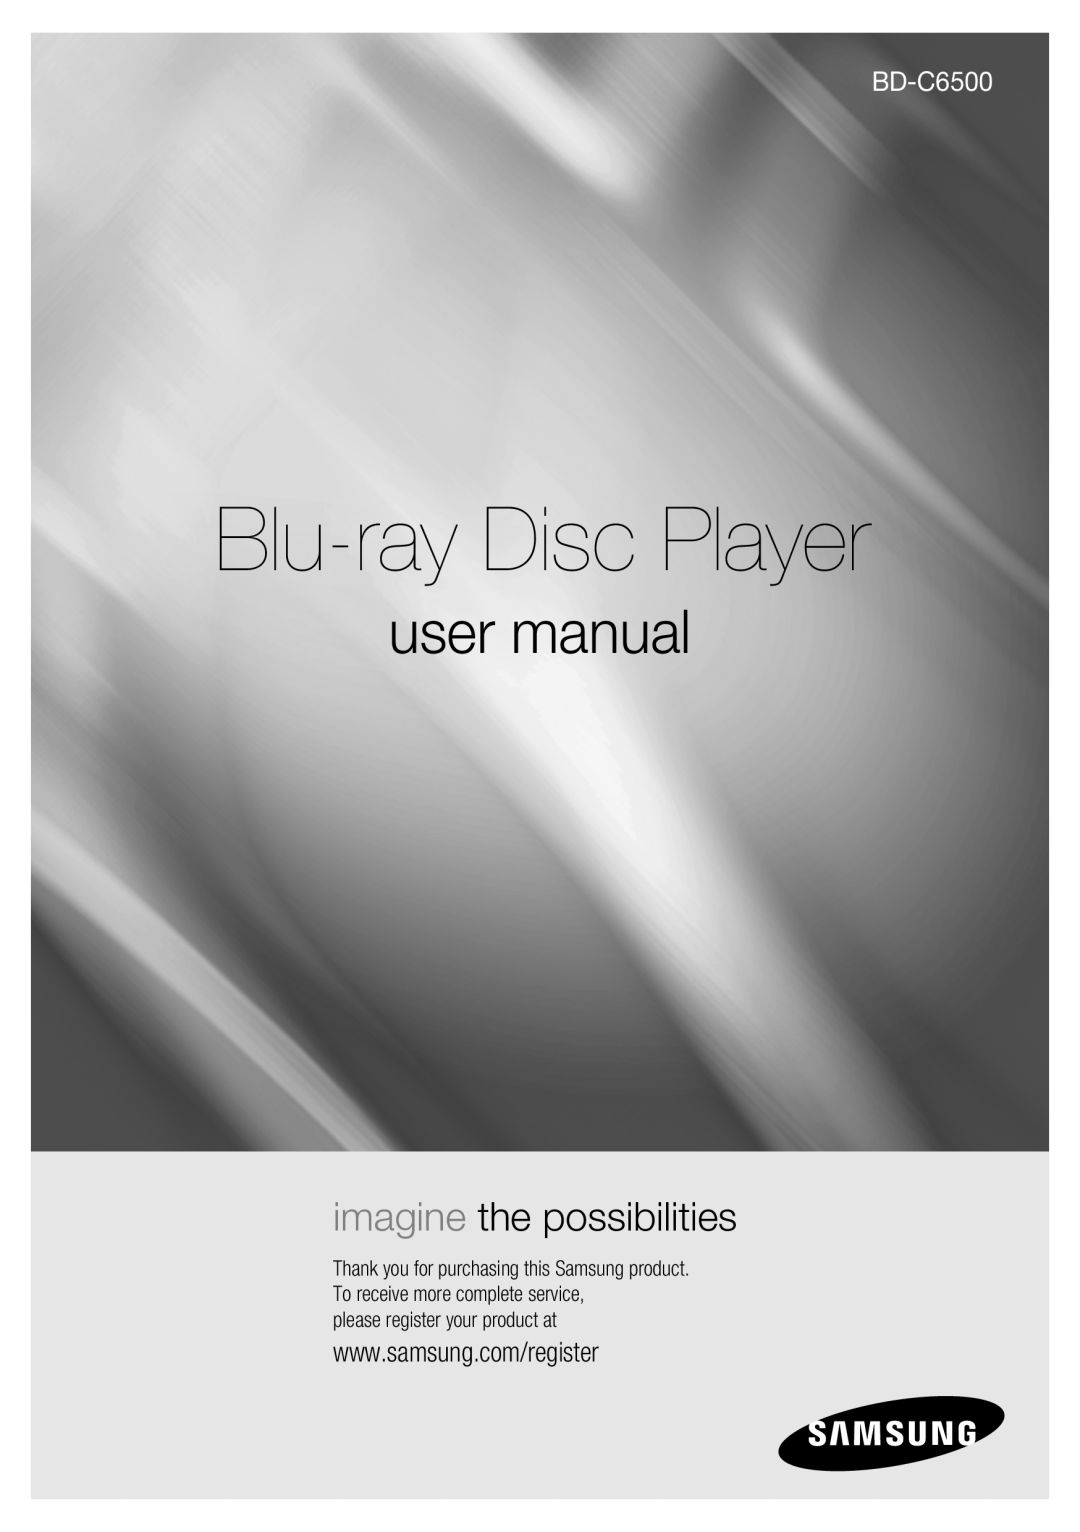 Samsung BD-C6500/XAA, BD-C6500/EDC, BD-C6500/XEF manual Blu-ray Disc Player, user manual, imagine the possibilities 